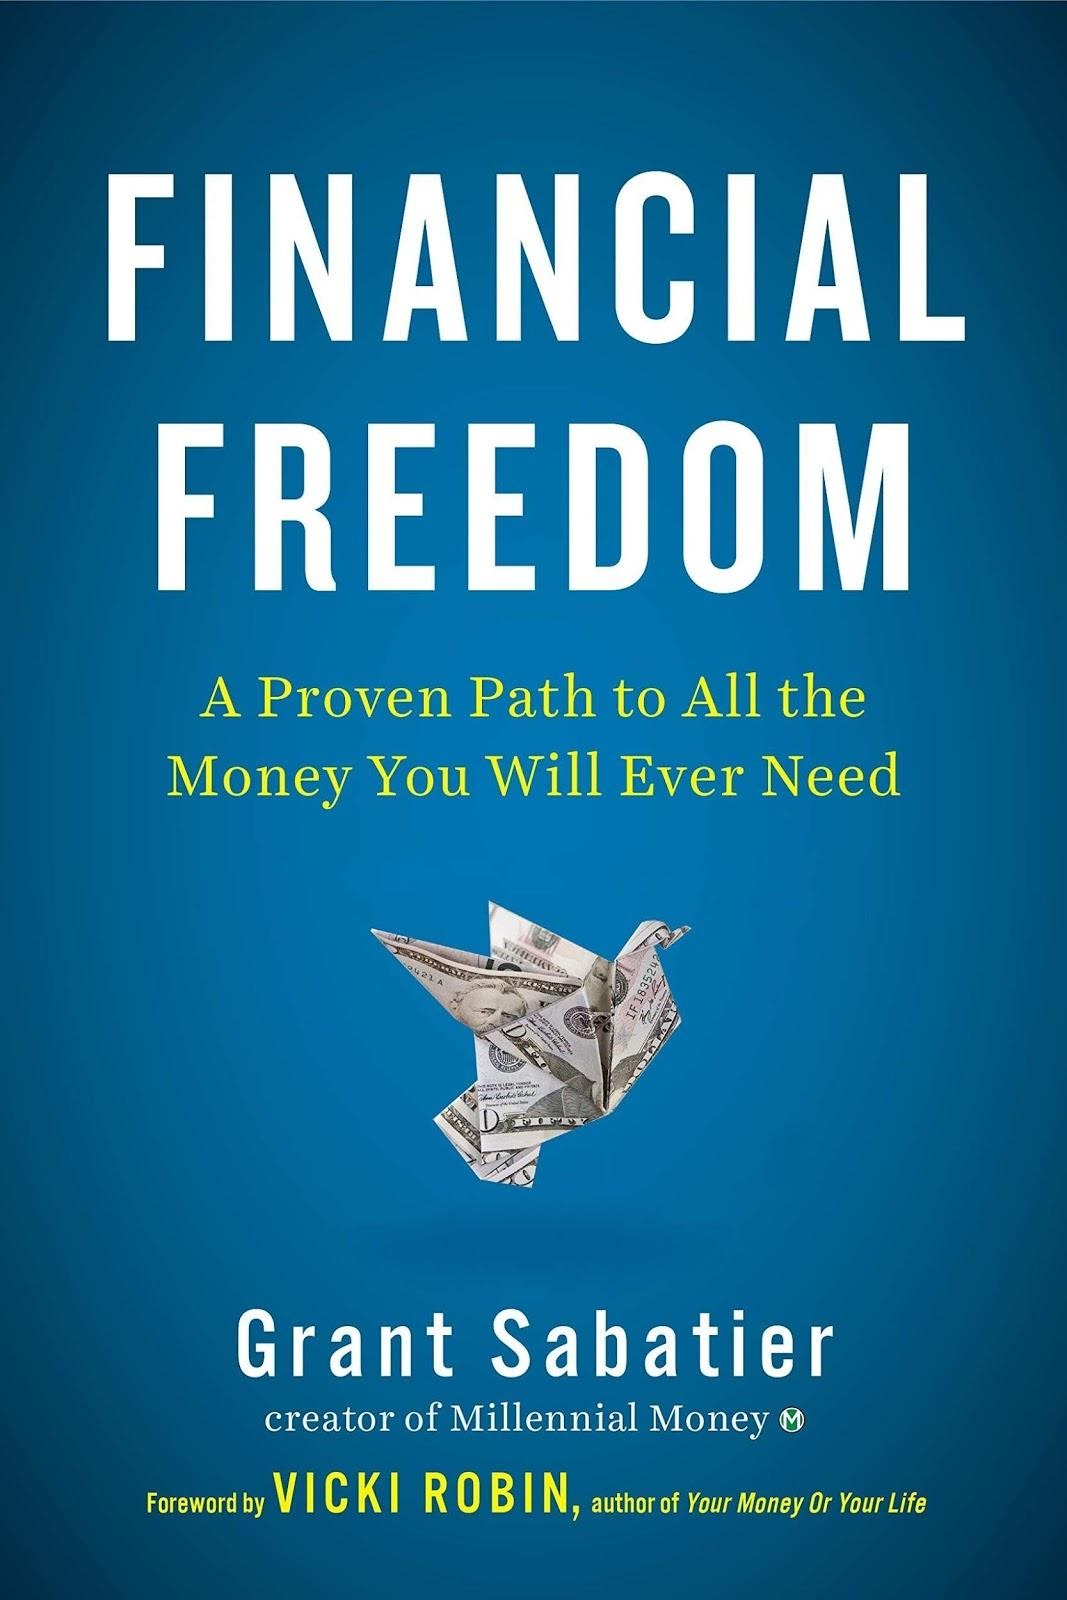 Libro “Financial Freedom”